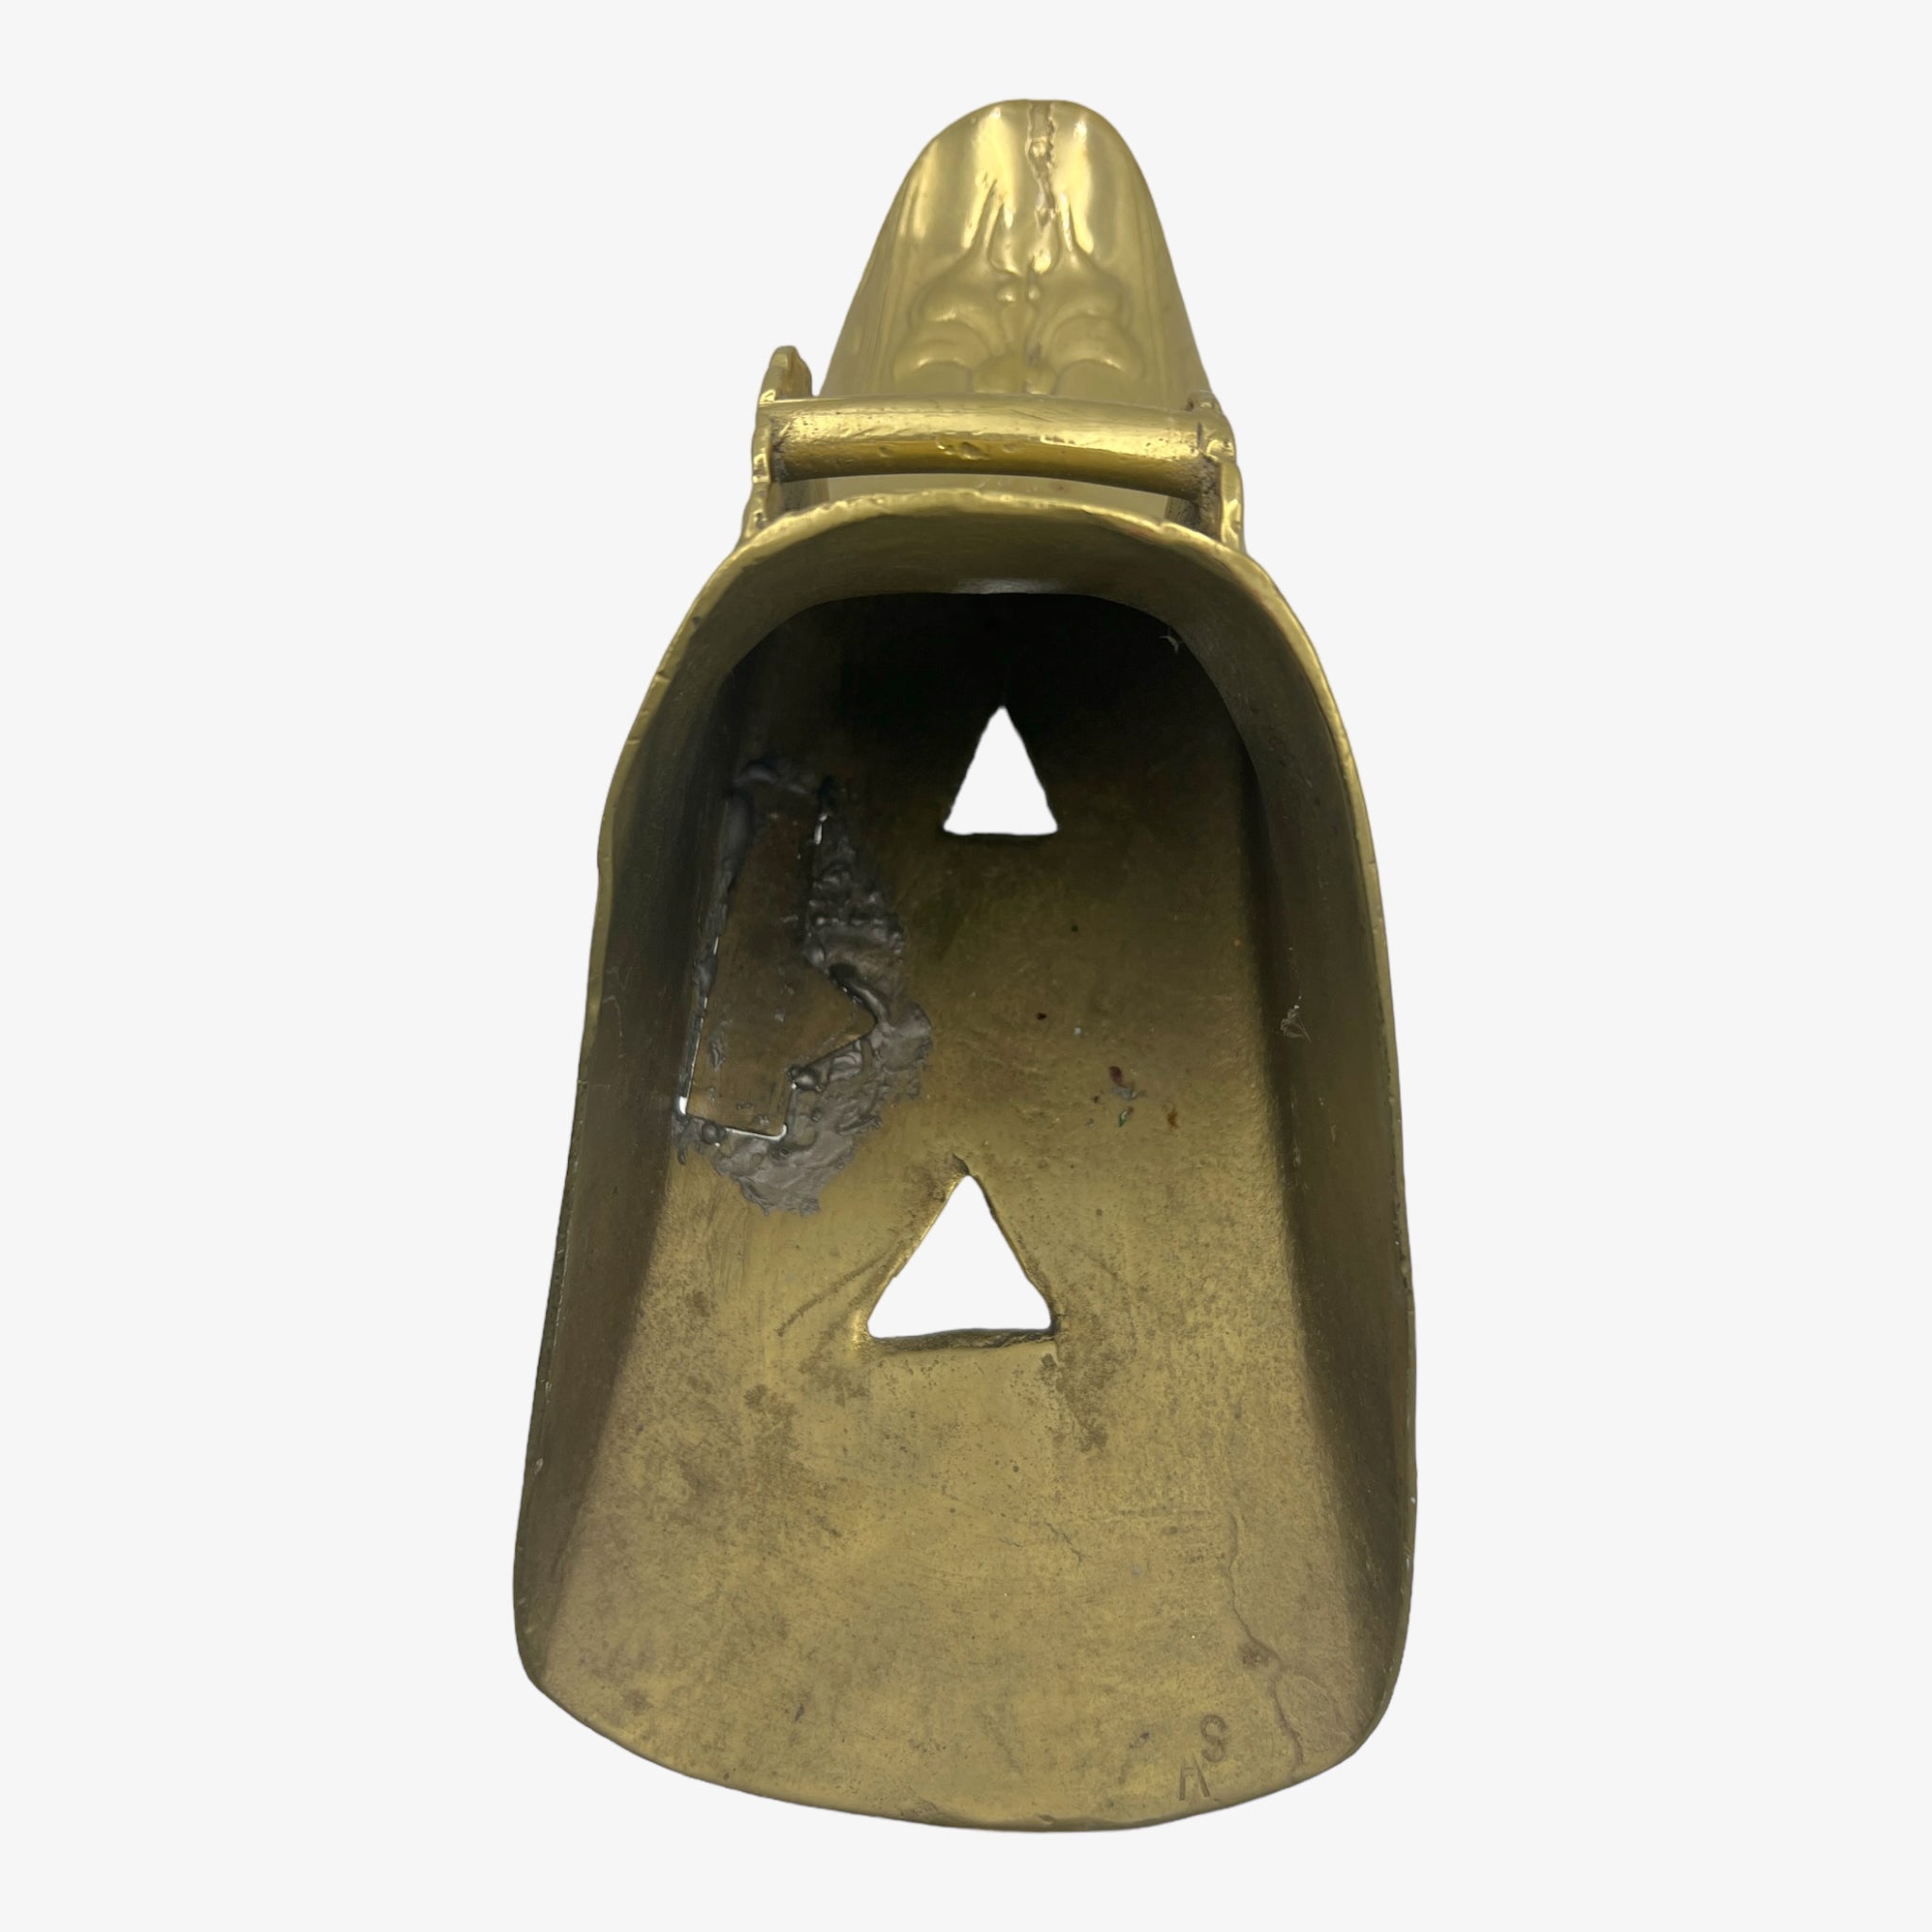 Antique Brass Spanish Conquistador Stirrup